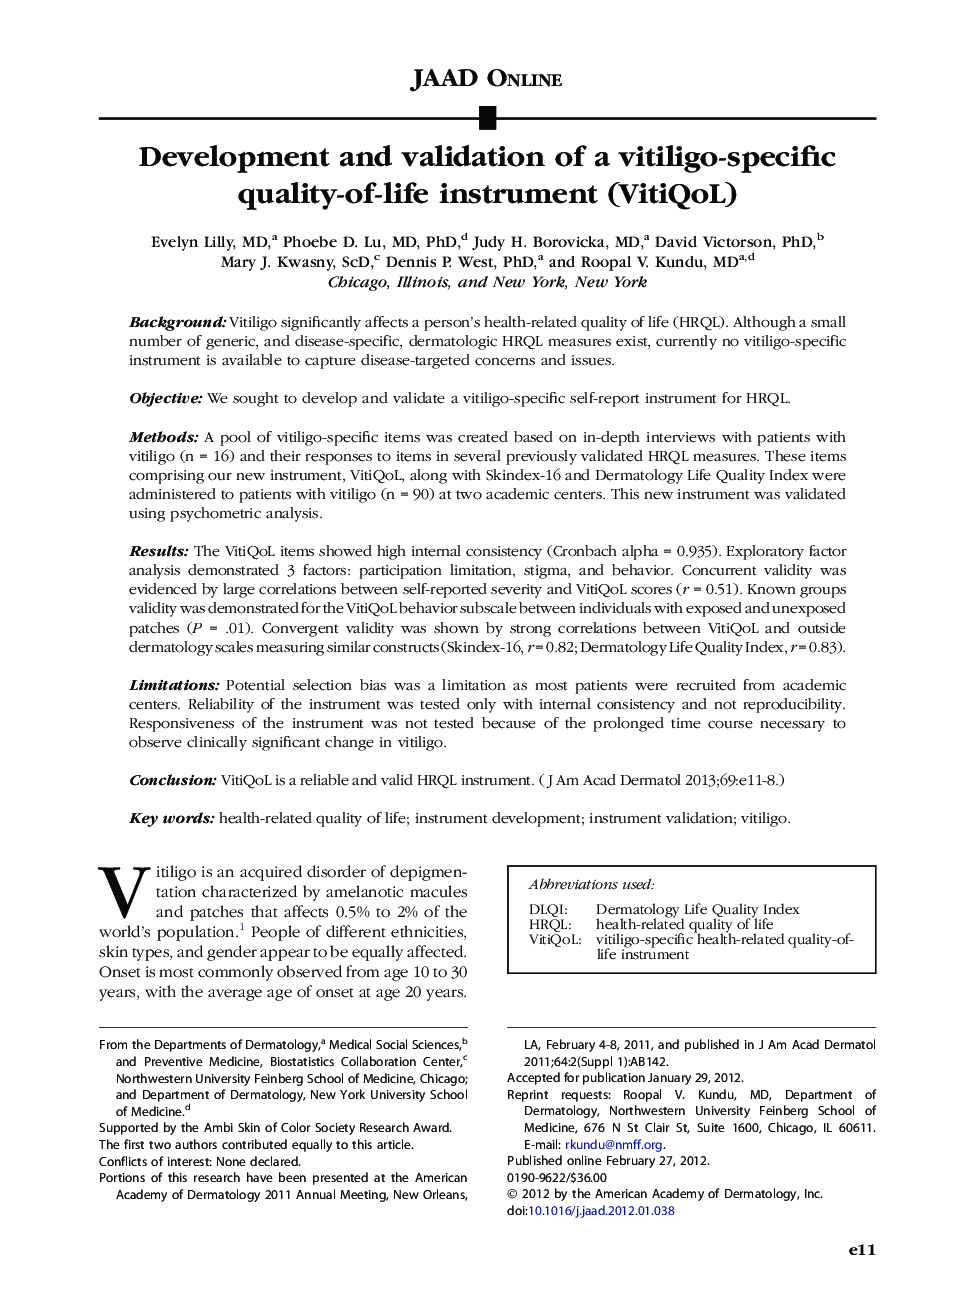 Development and validation of a vitiligo-specific quality-of-life instrument (VitiQoL) 